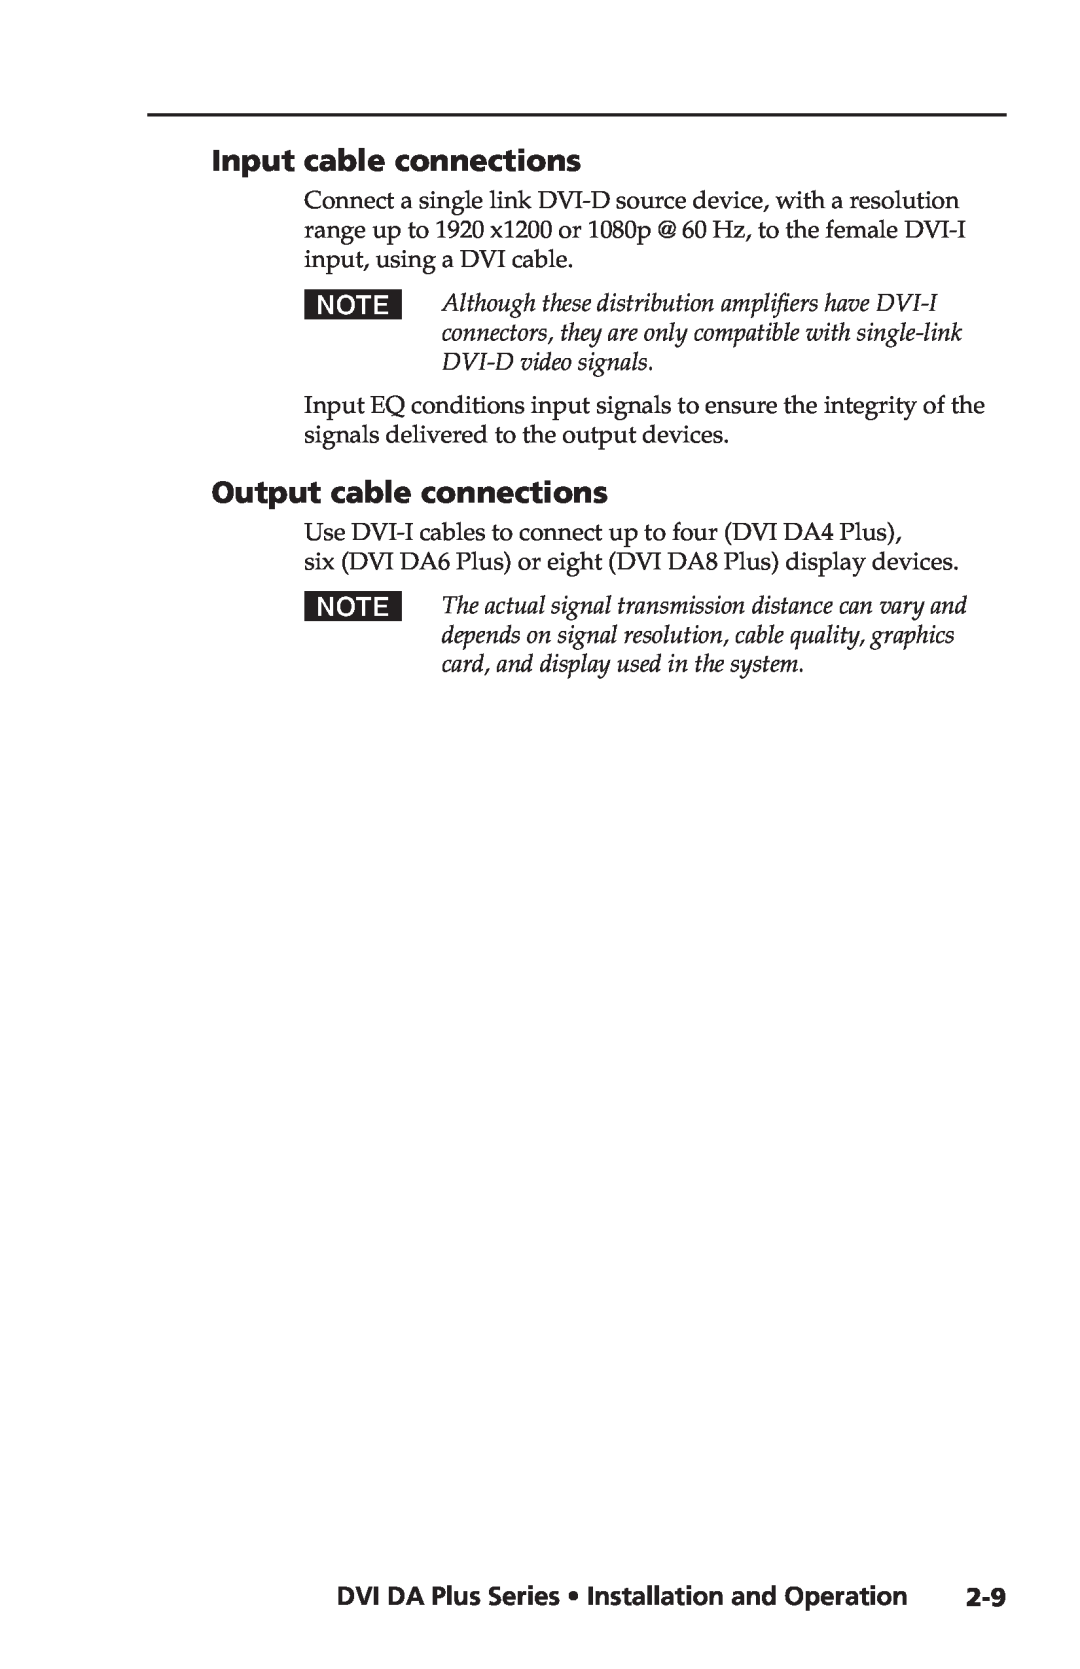 Extron electronic DVI DA8 Plus, DVI DA6 Plus, DVI DA Plus Series manual Input cable connections, Output cable connections 